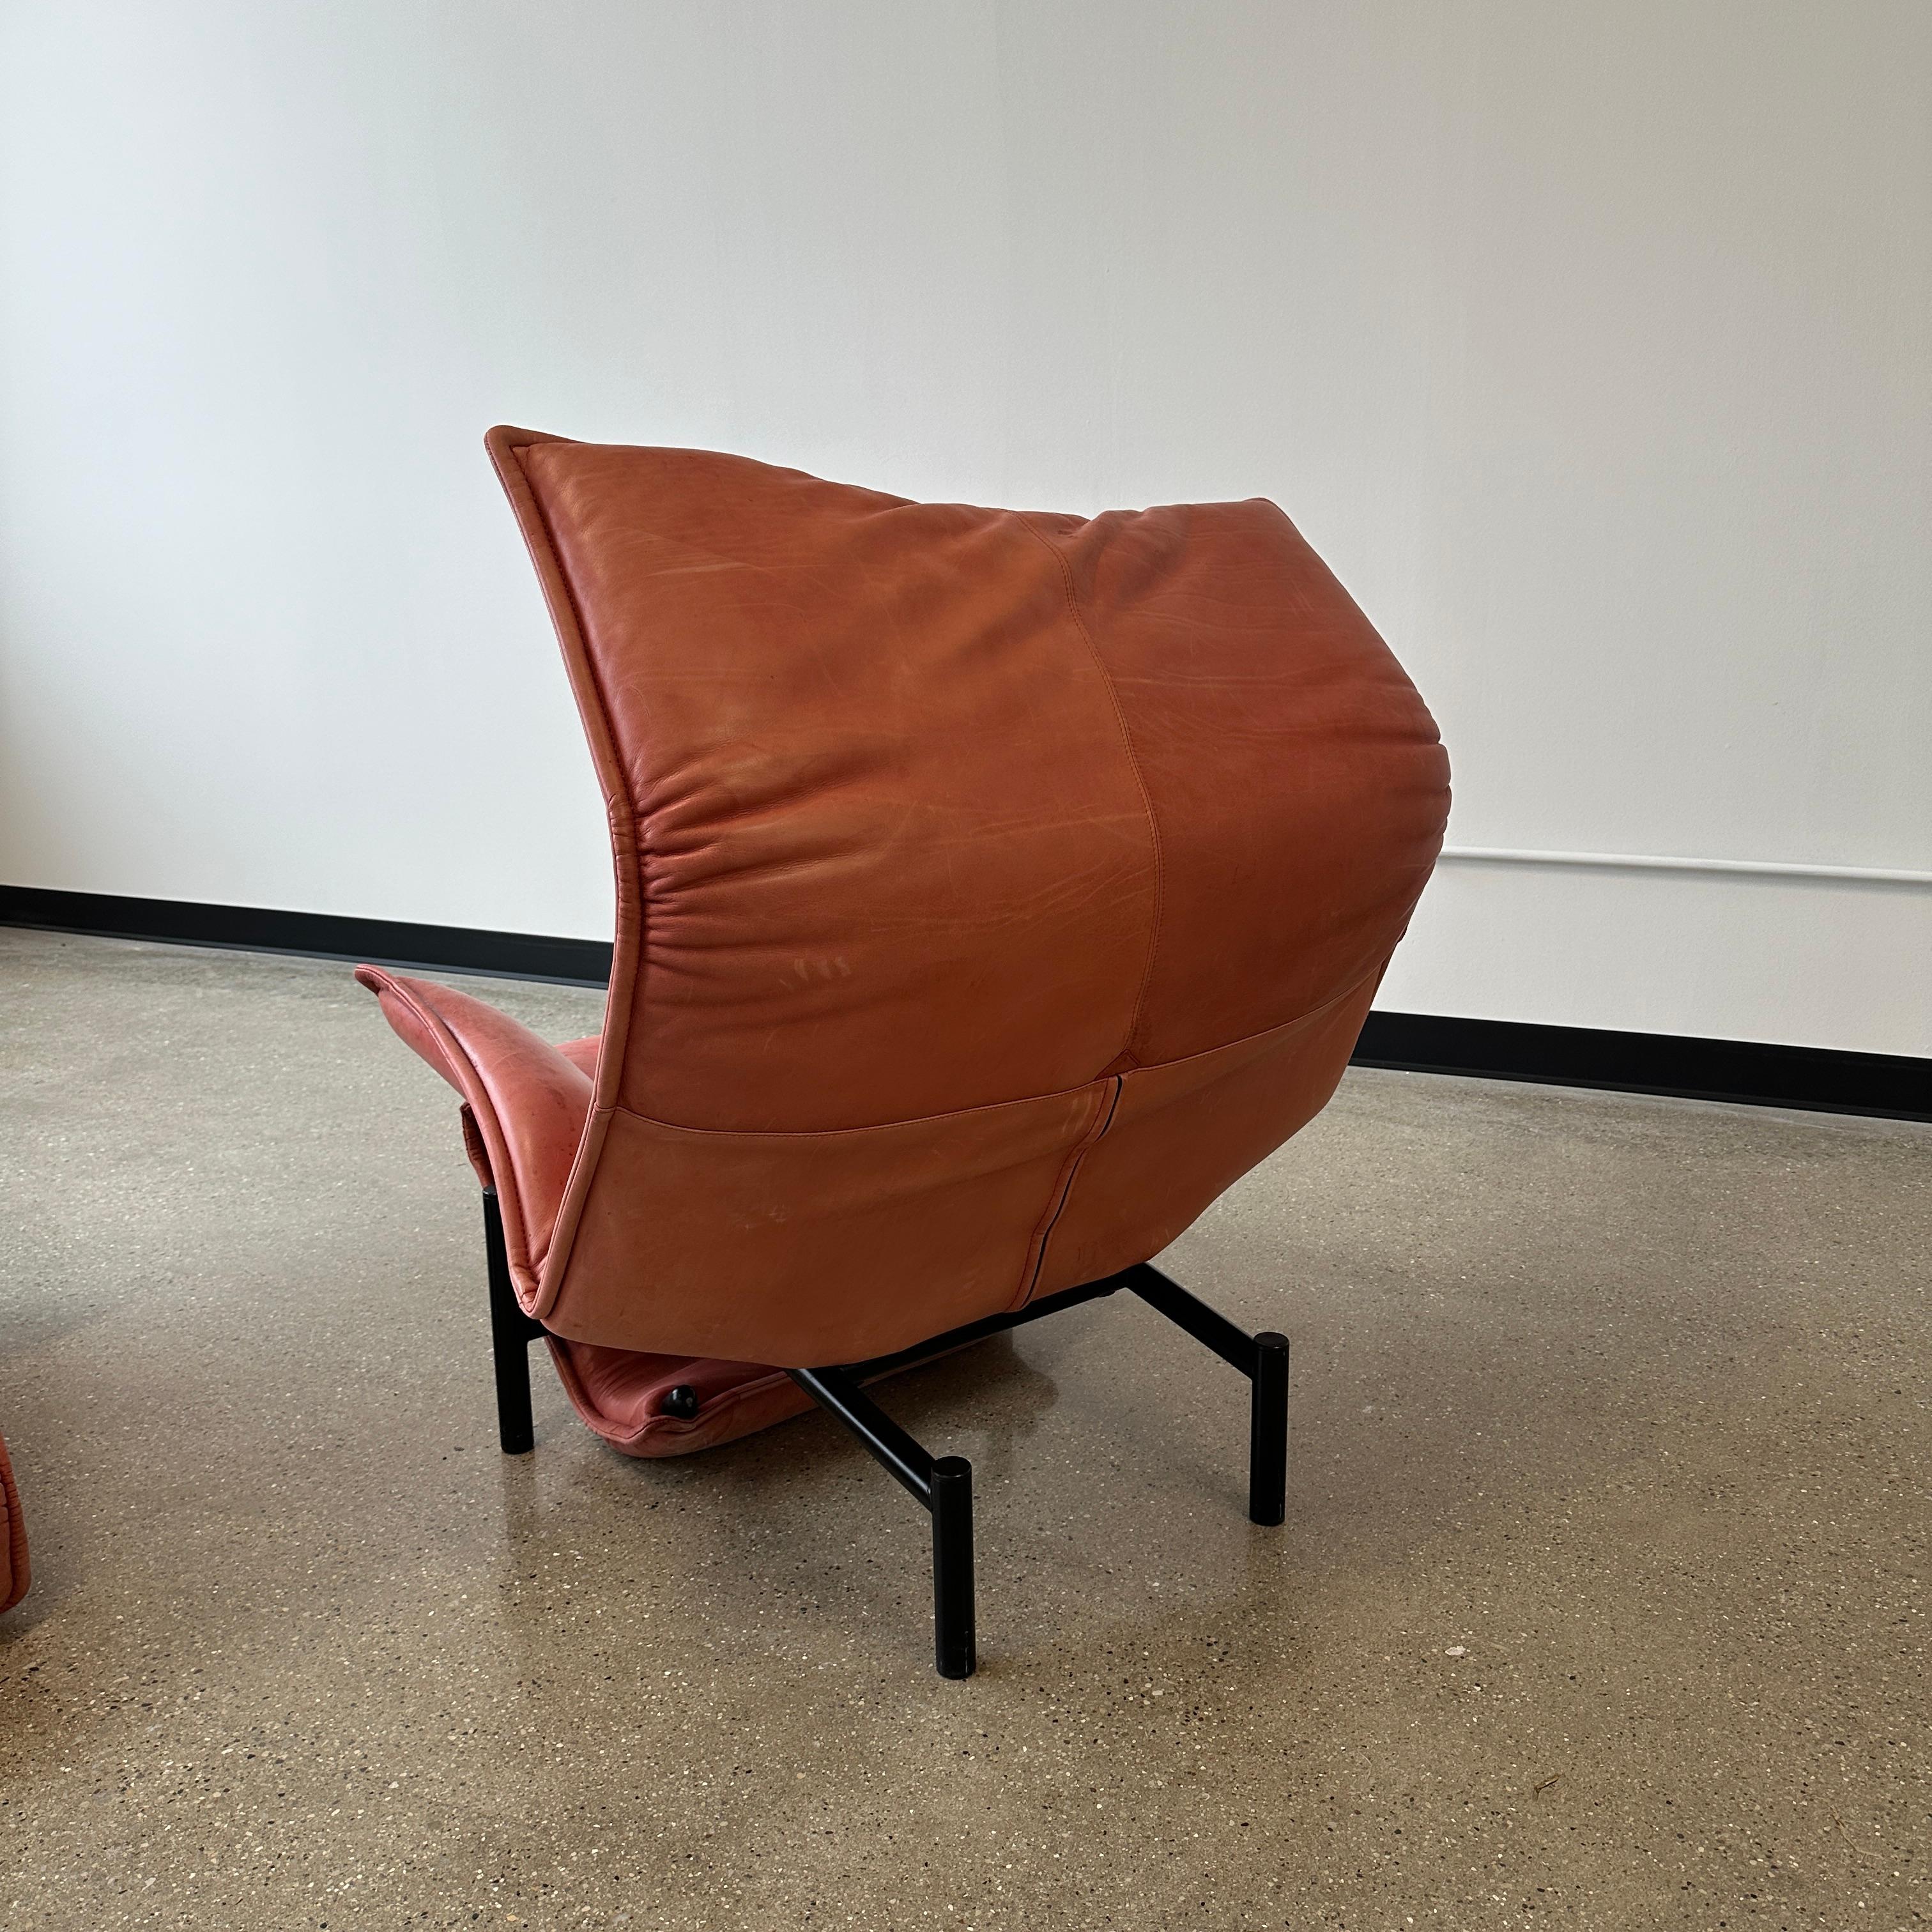 Metal Vico Magistretti “Veranda” Chairs, a pair For Sale